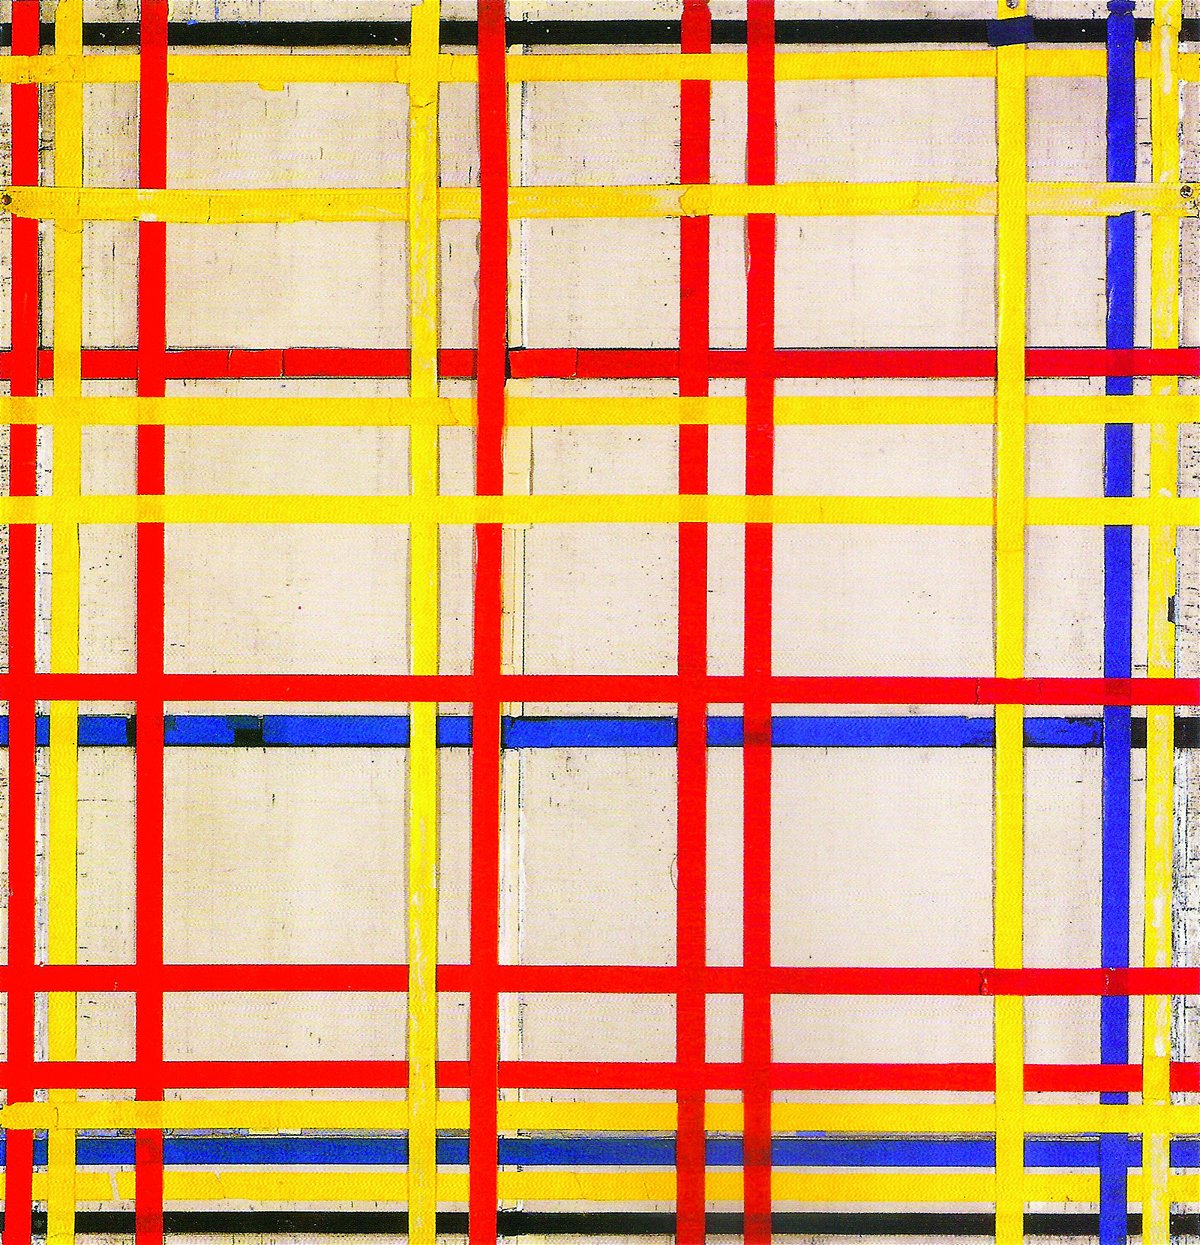 <i>History & Art Collection/Alamy Stock Photo</i><br/>Piet Mondrian 